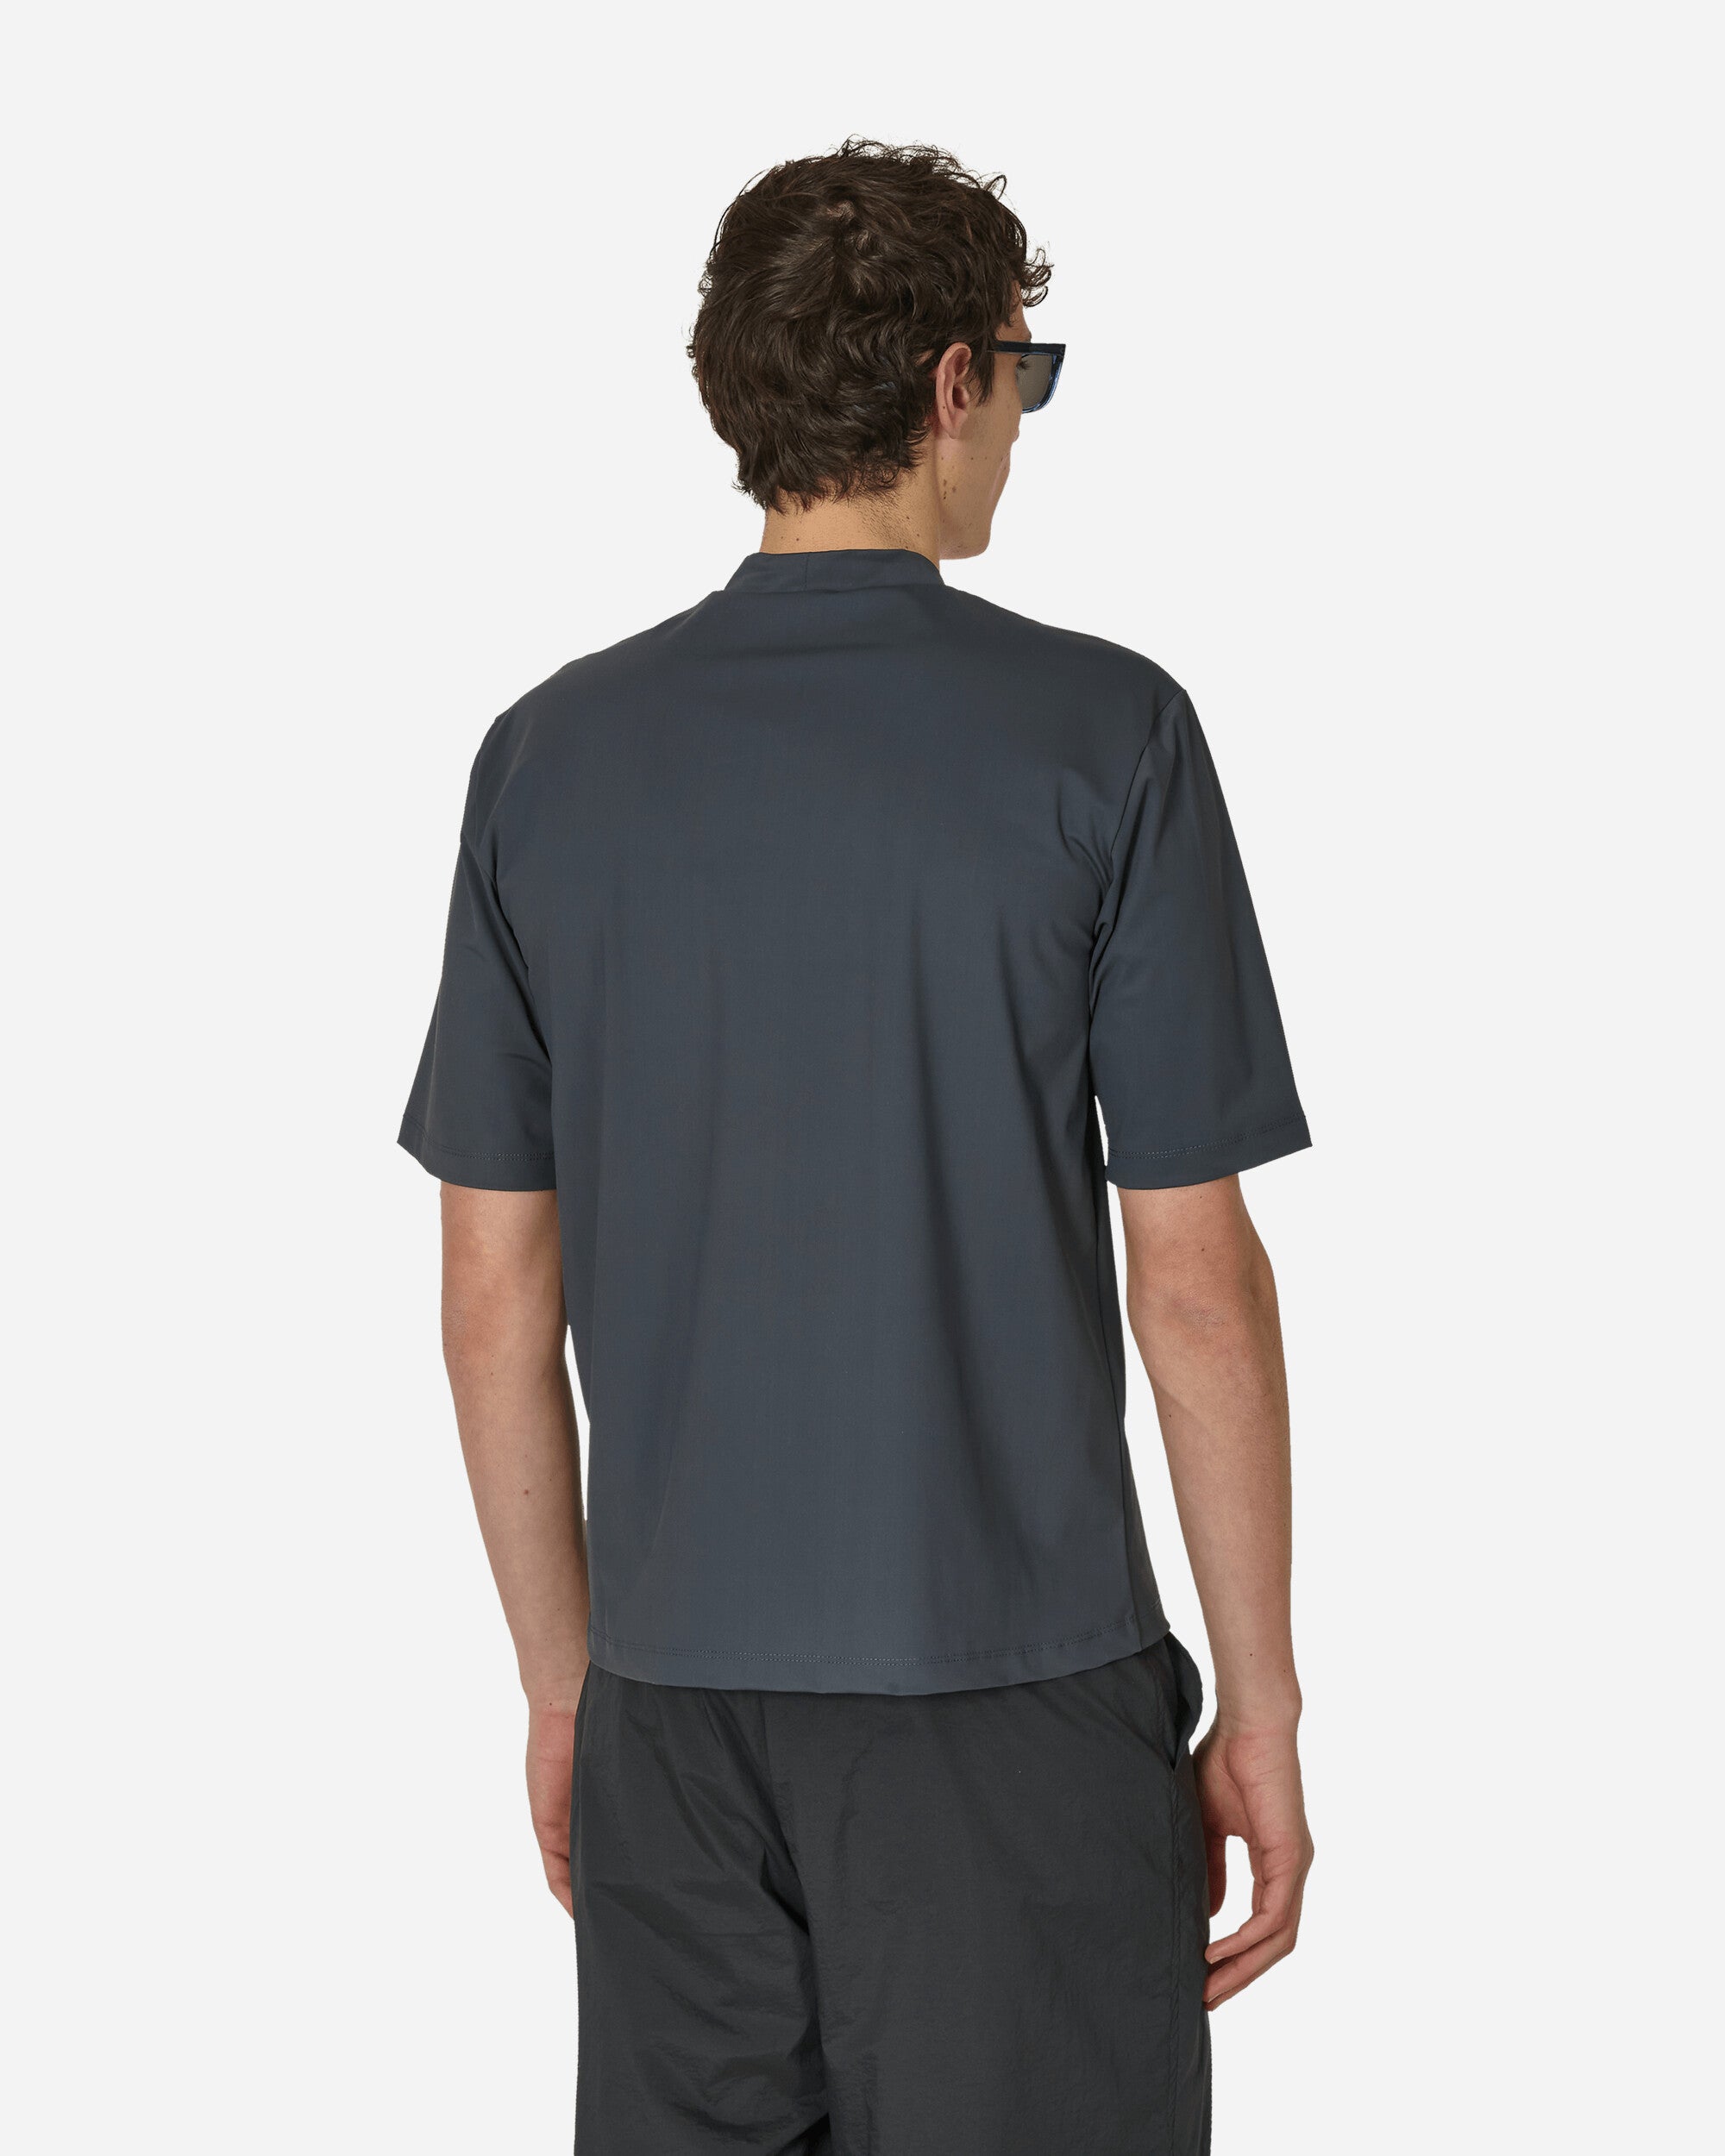 AMOMENTO Mock Neck T-Shirt Charcoal T-Shirts Shortsleeve AM24SSM02TS CHCL